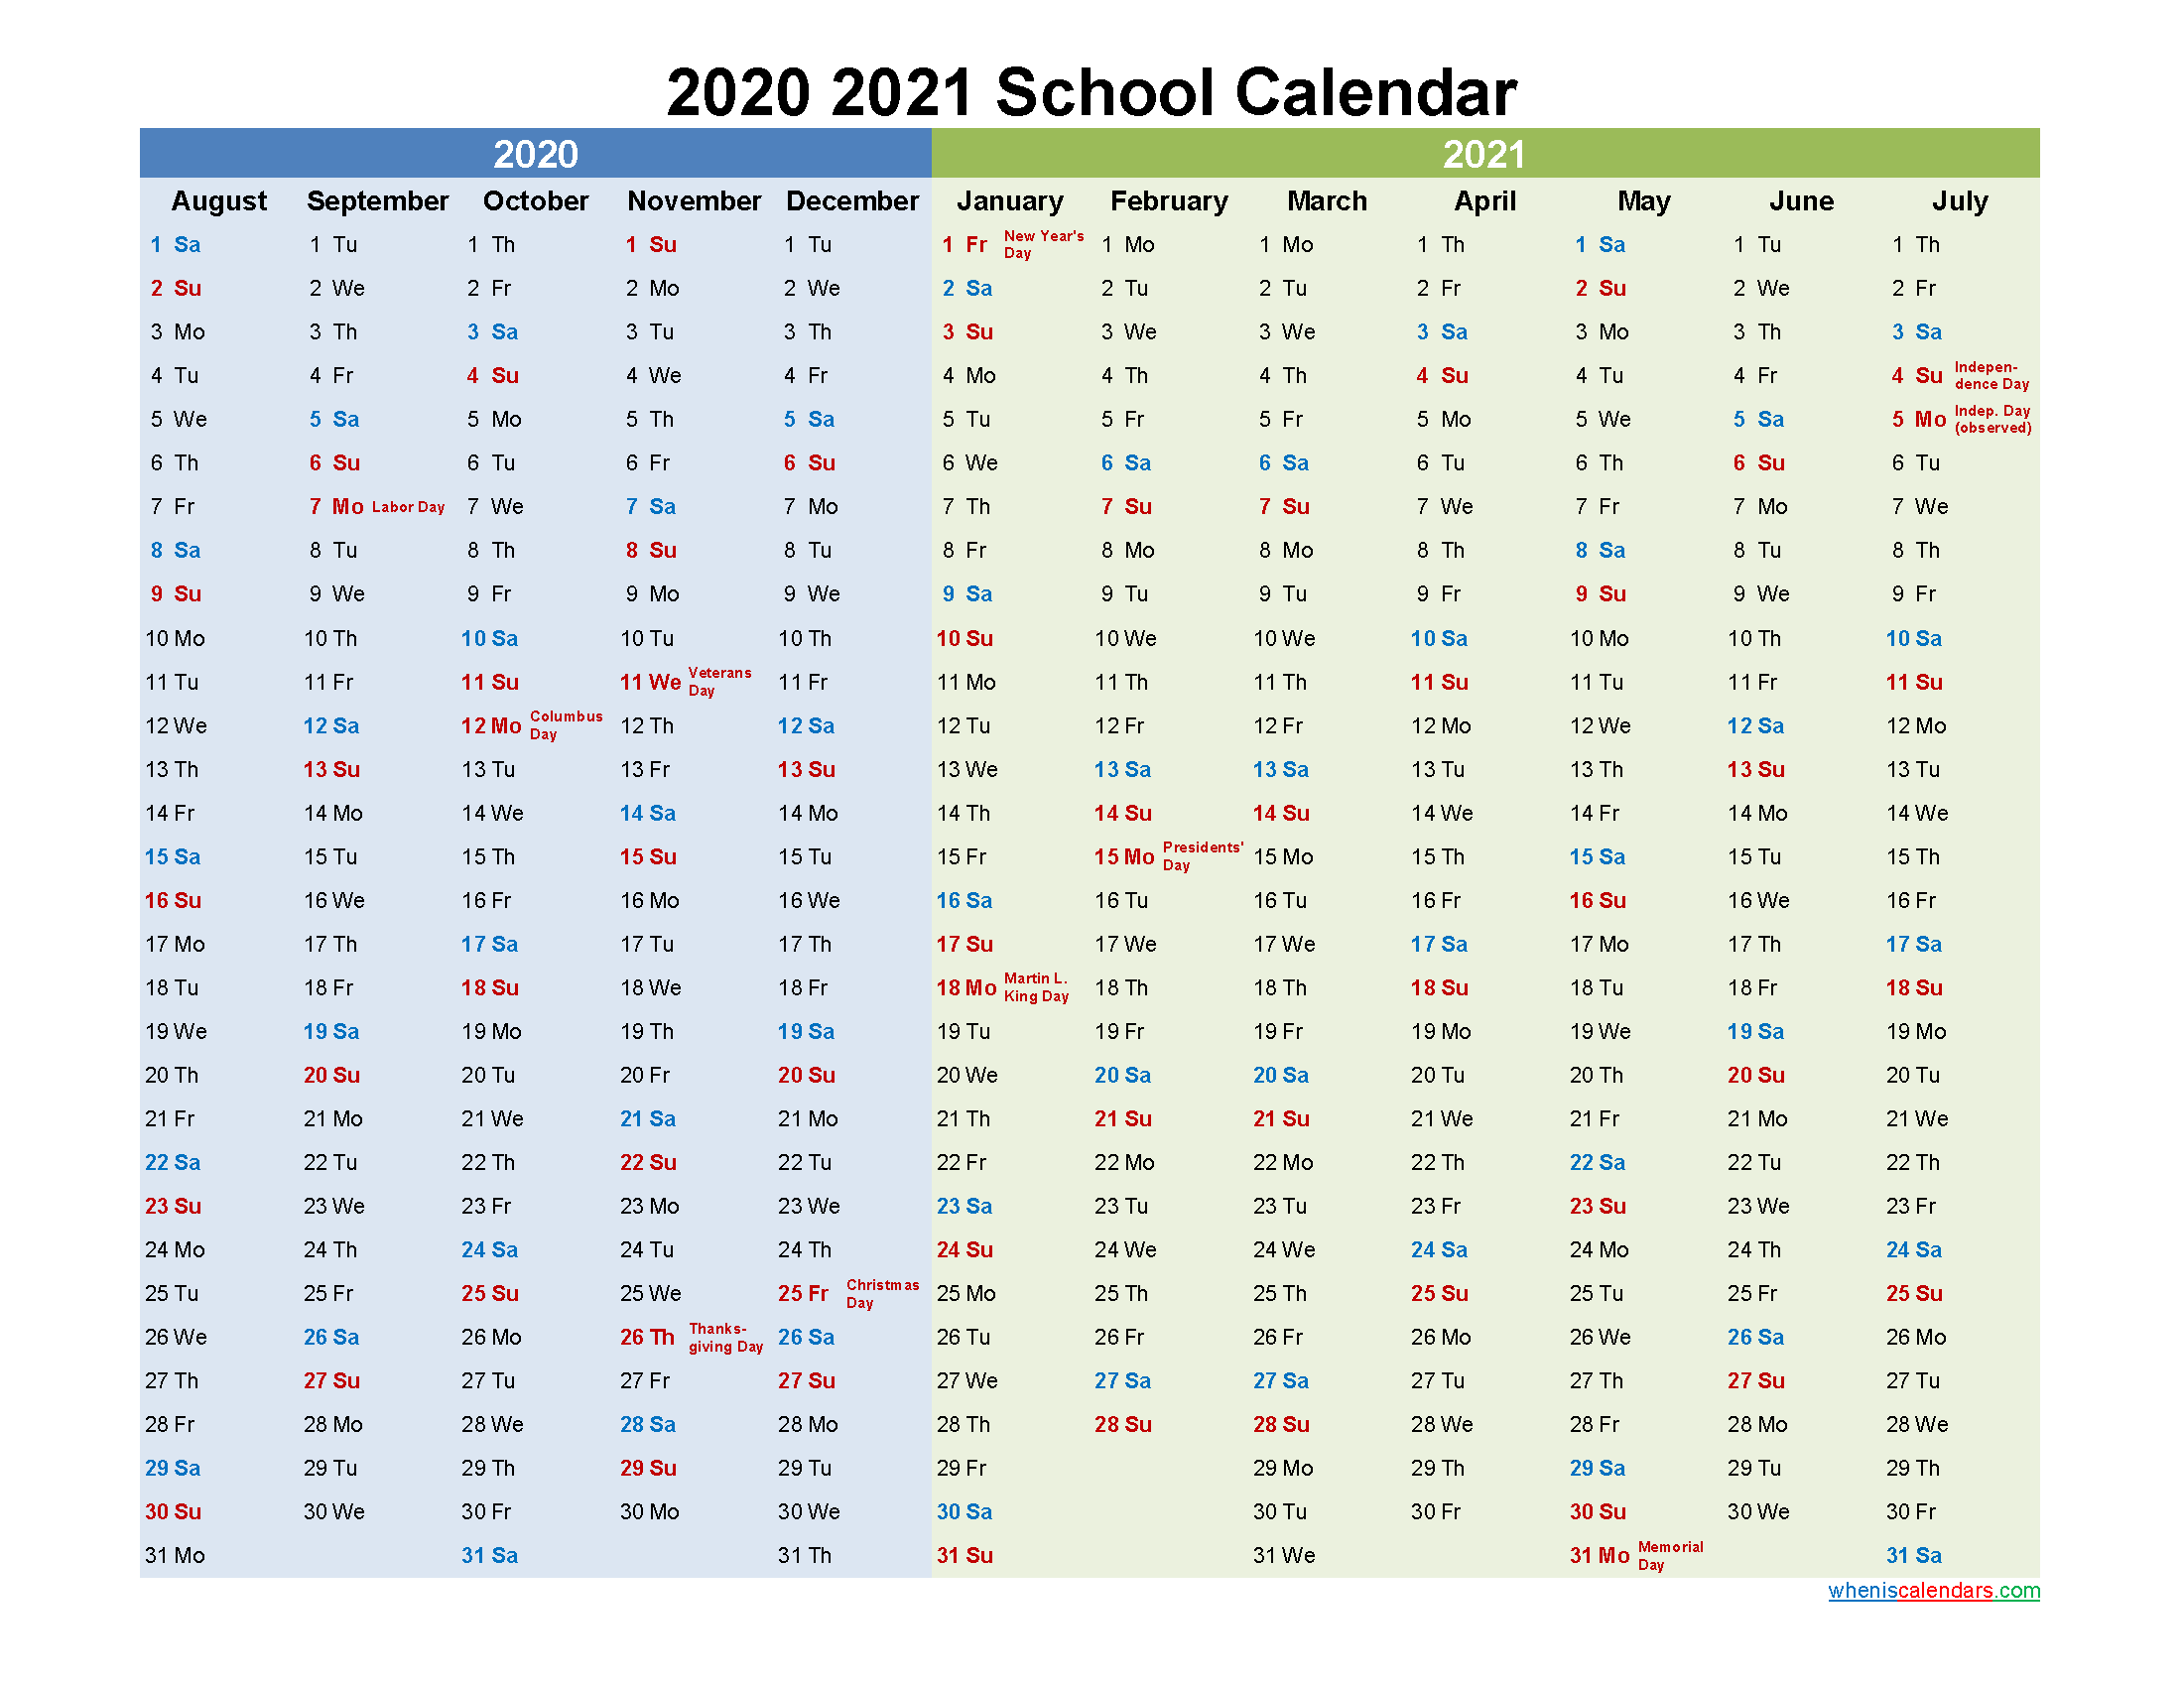 2020 and 2021 School Calendar Printable - Template No.21scl22